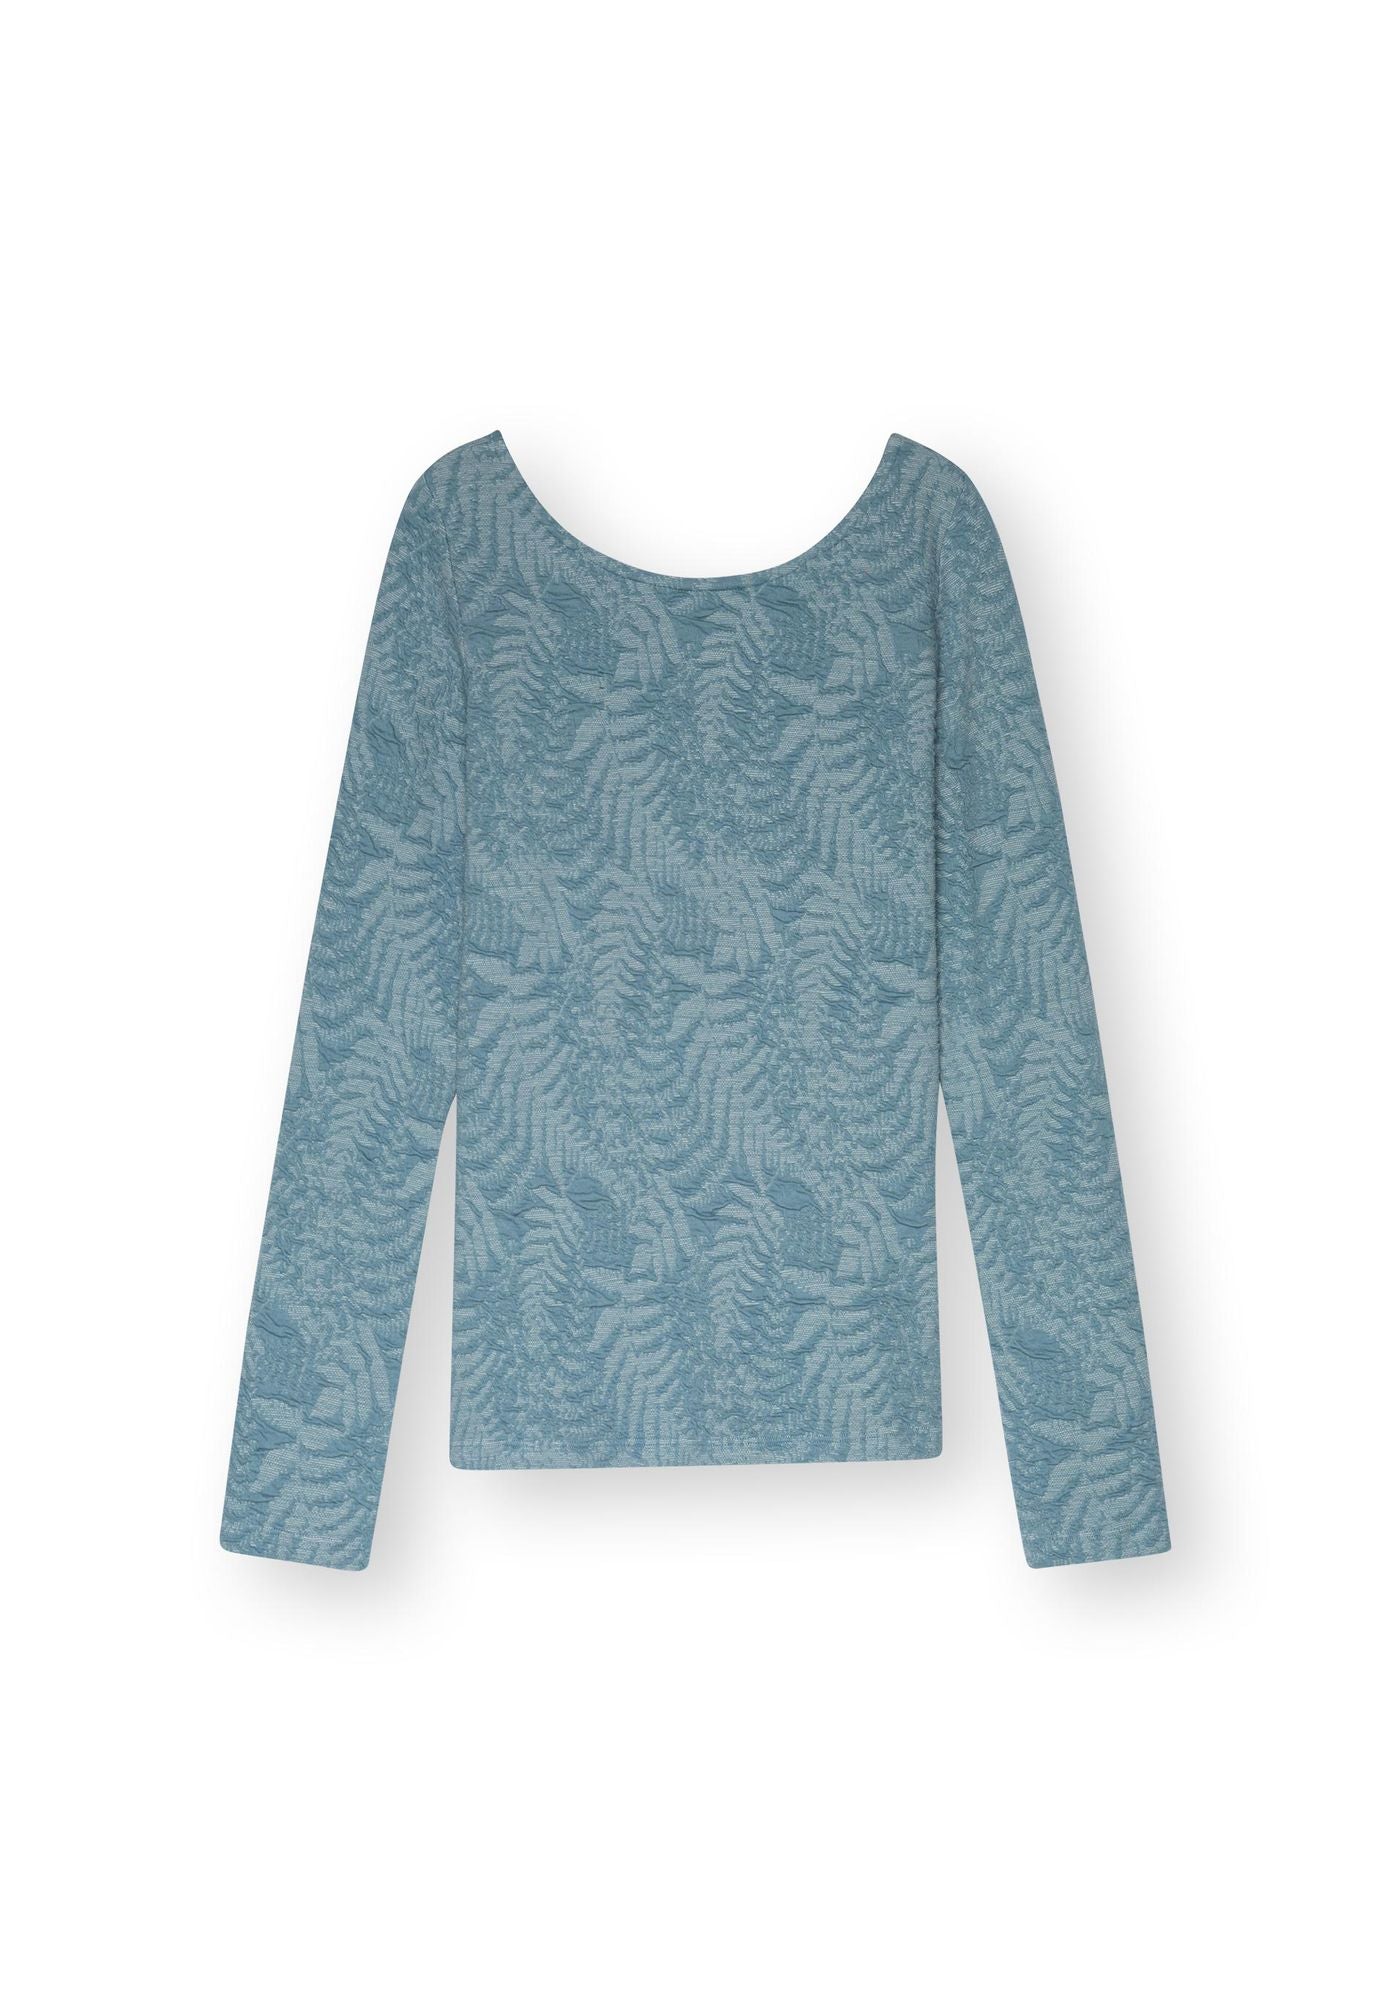 Longsleeve-Shirt OPPLIA in blau von LOVJOI aus Bio-Baumwolle (ST)